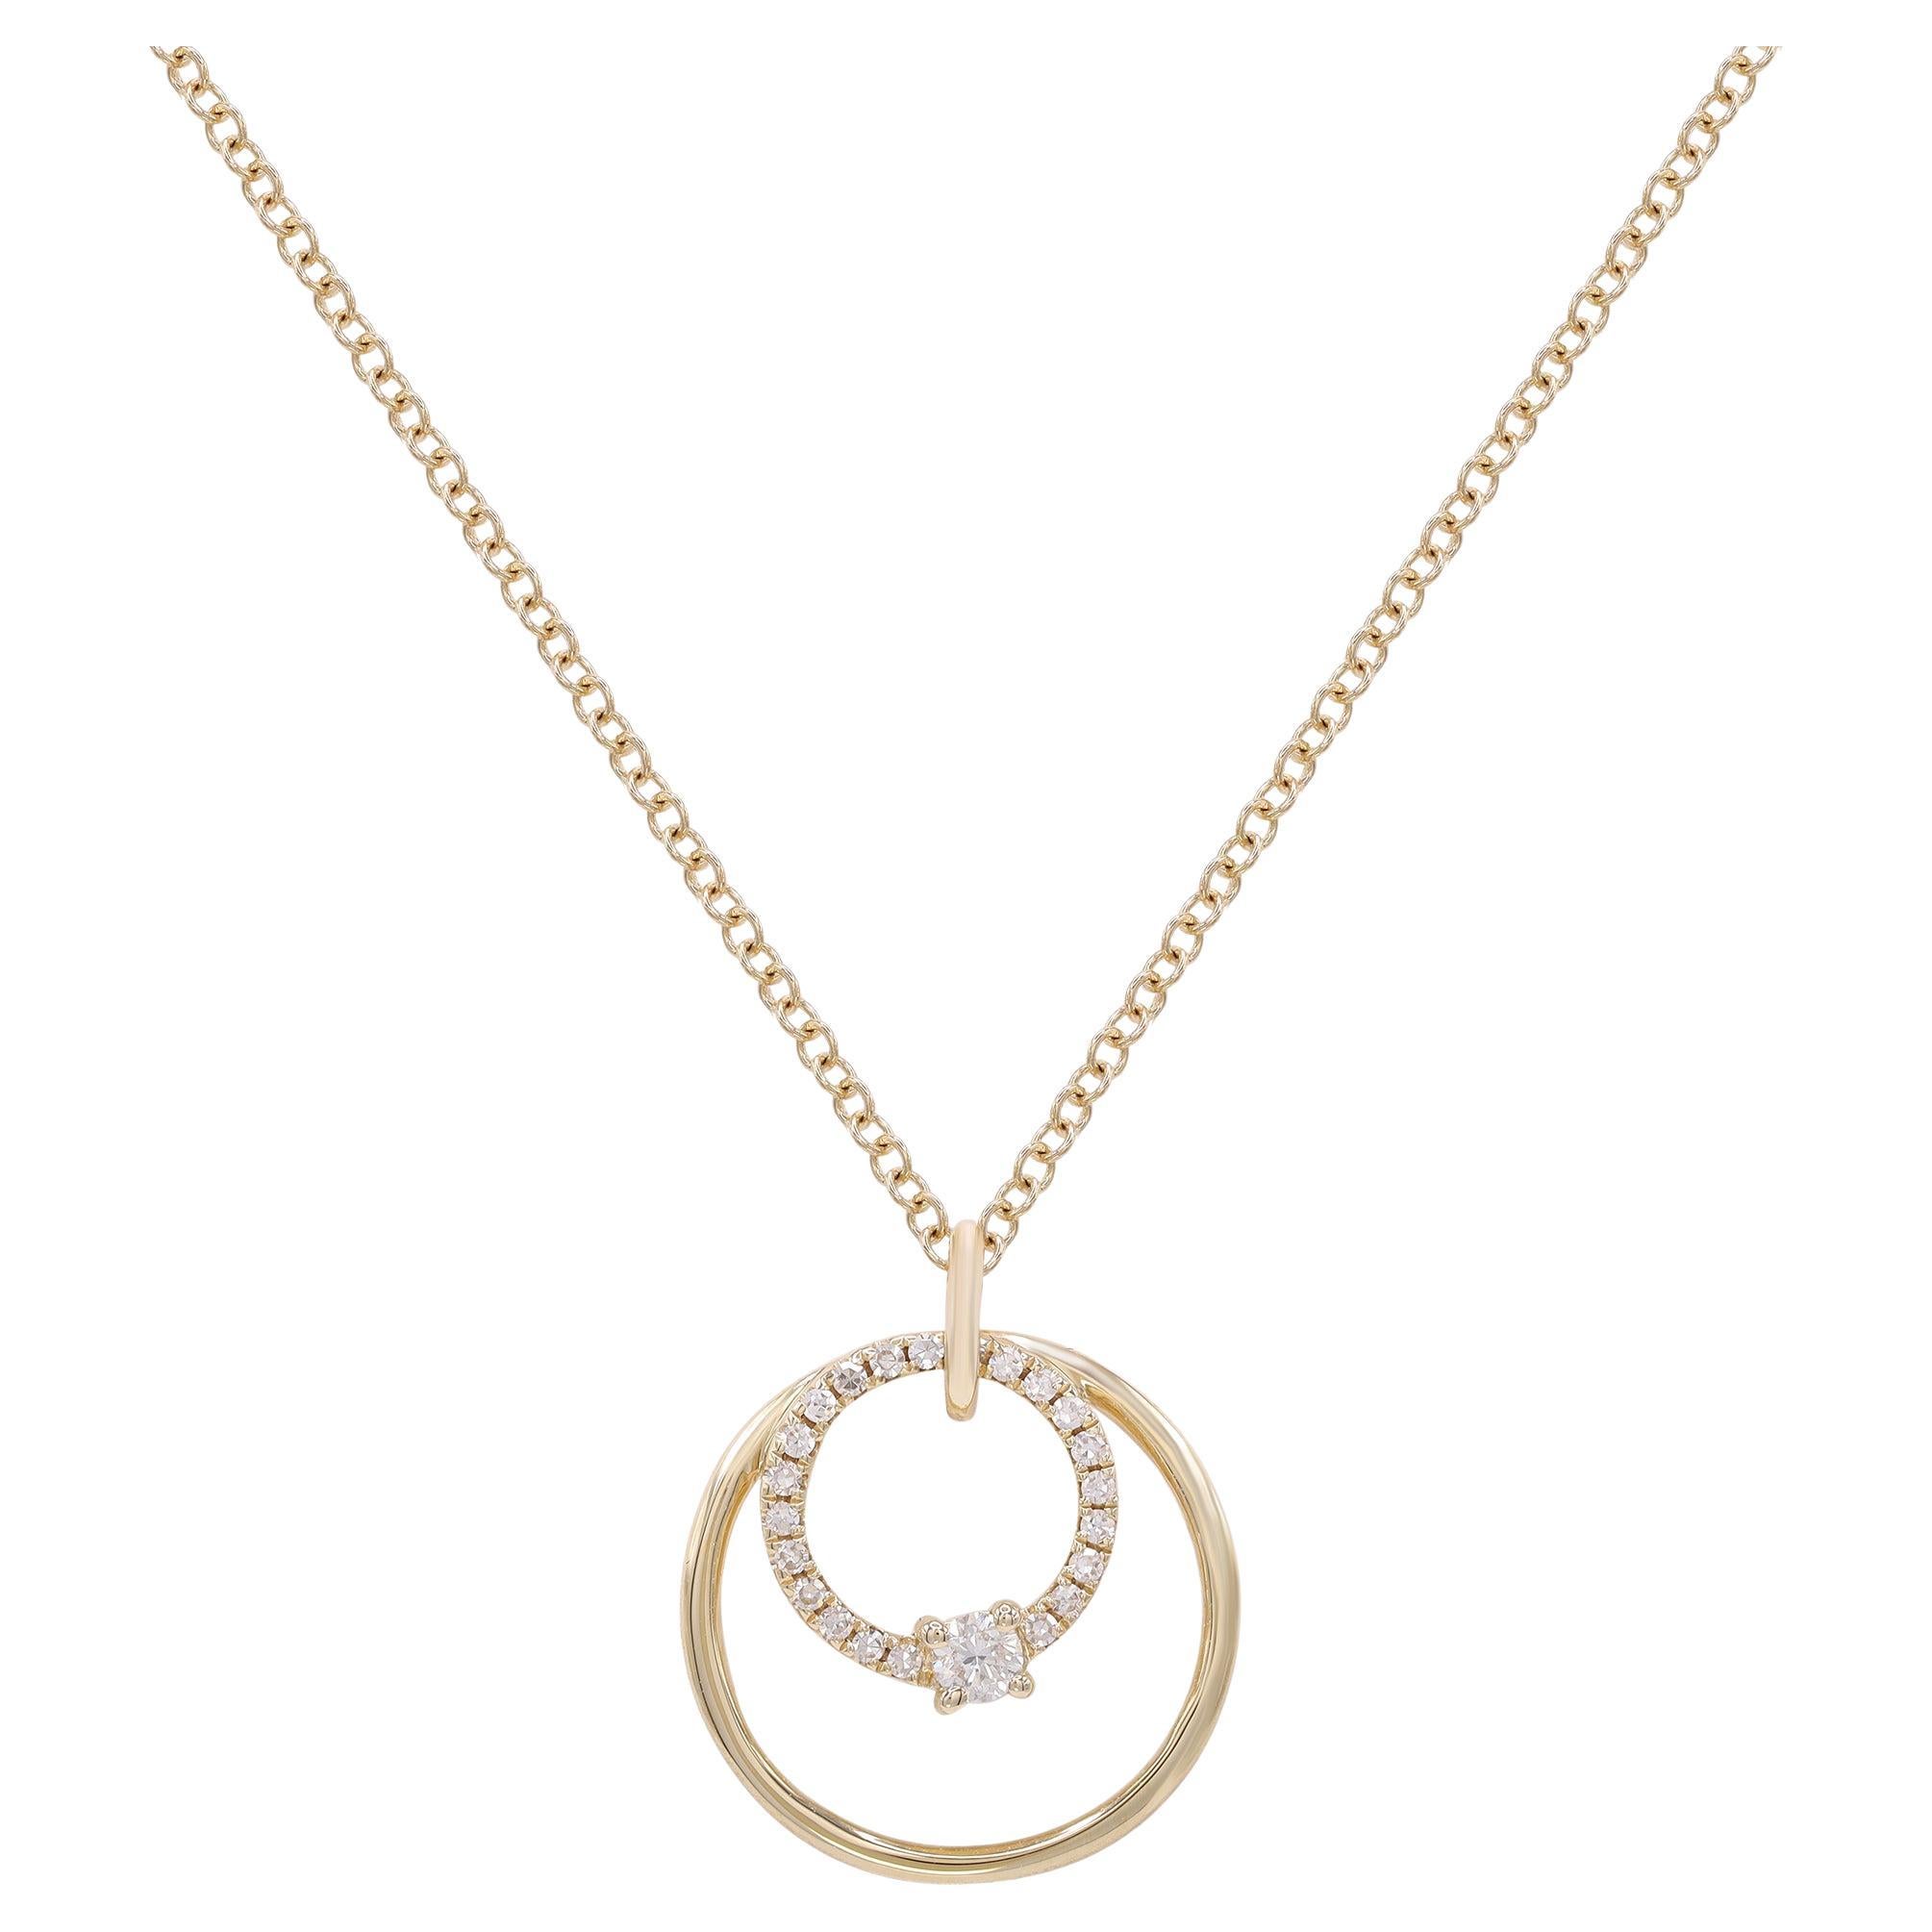 Rachel Koen Diamond Double Ring Pendant Necklace 14K Yellow Gold 0.11Cttw For Sale